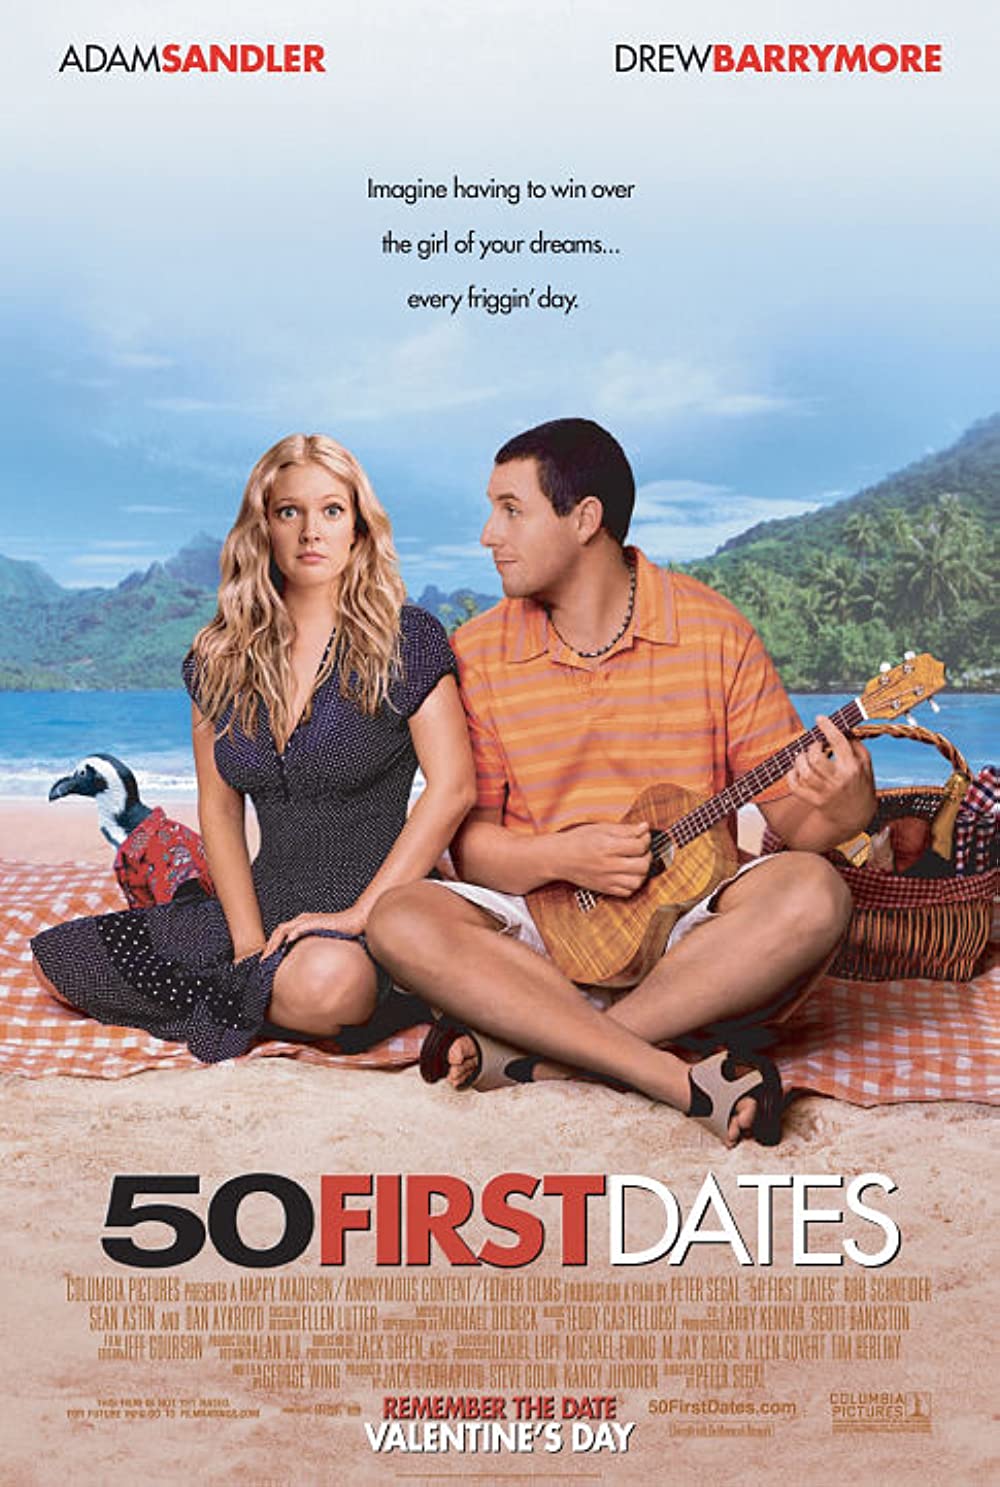 Filmbeschreibung zu 50 First Dates